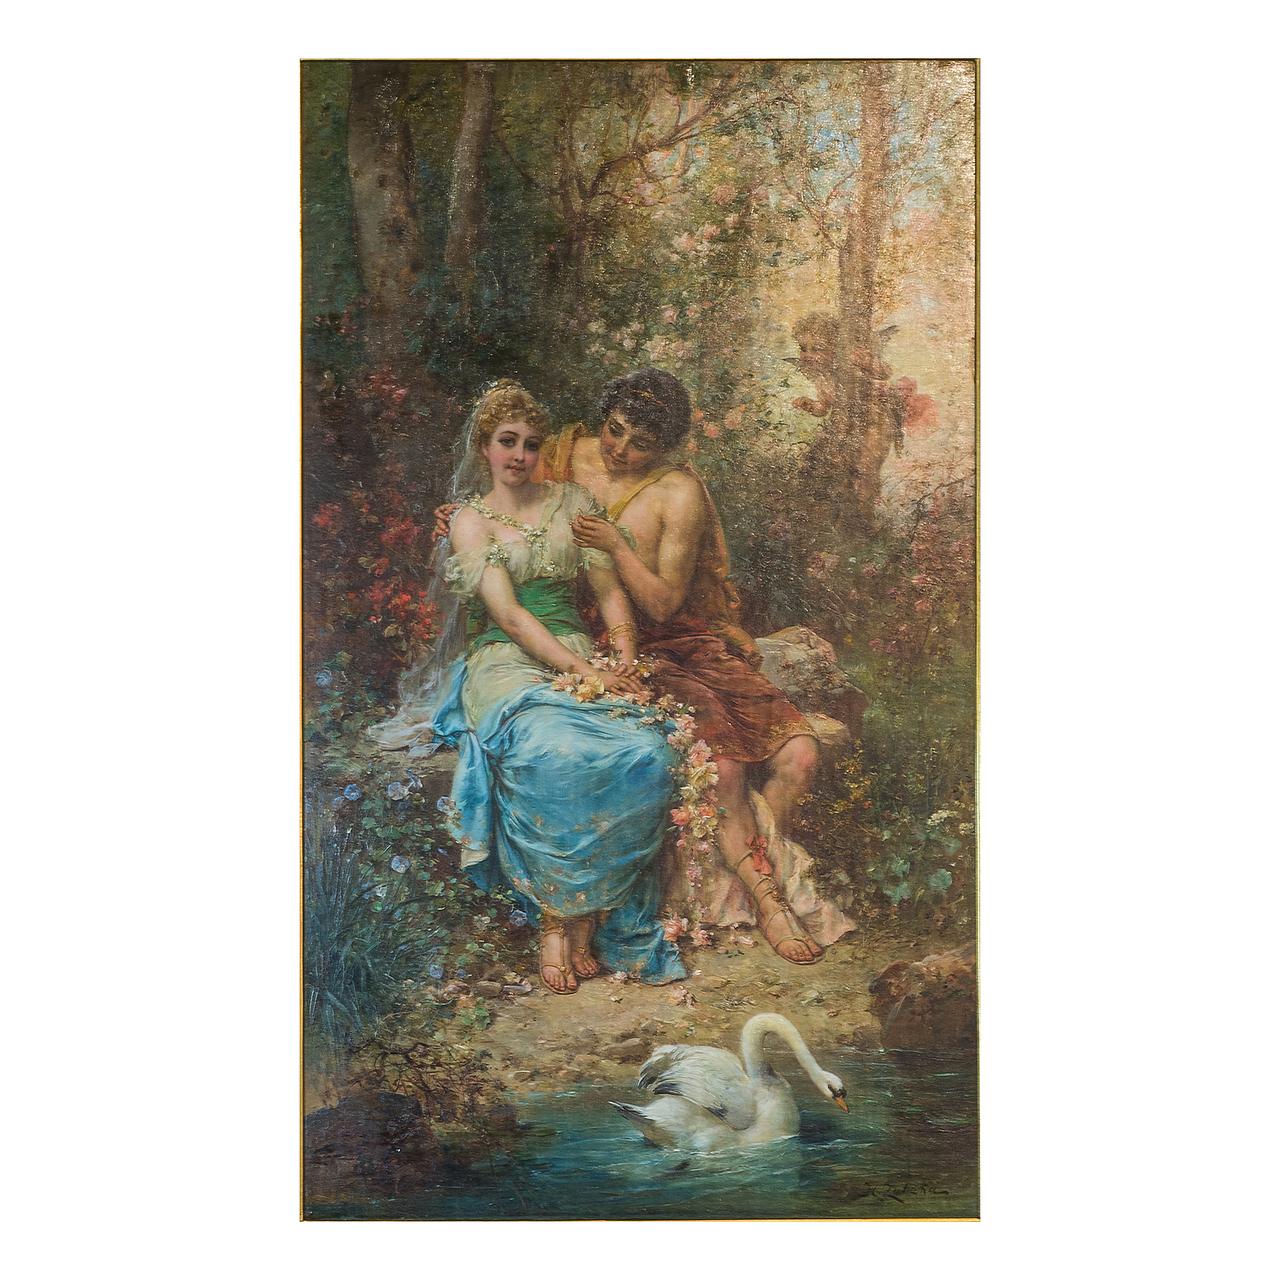 HANS ZATZKA
Austrian, 1859-1949

Two Maidens by the Pond

Signed 'H. Zatzka' LR 

Oil on canvas
33 1/2 x 20 1/2 inches (canvas); 45 x 32 x 4 inches (framed)